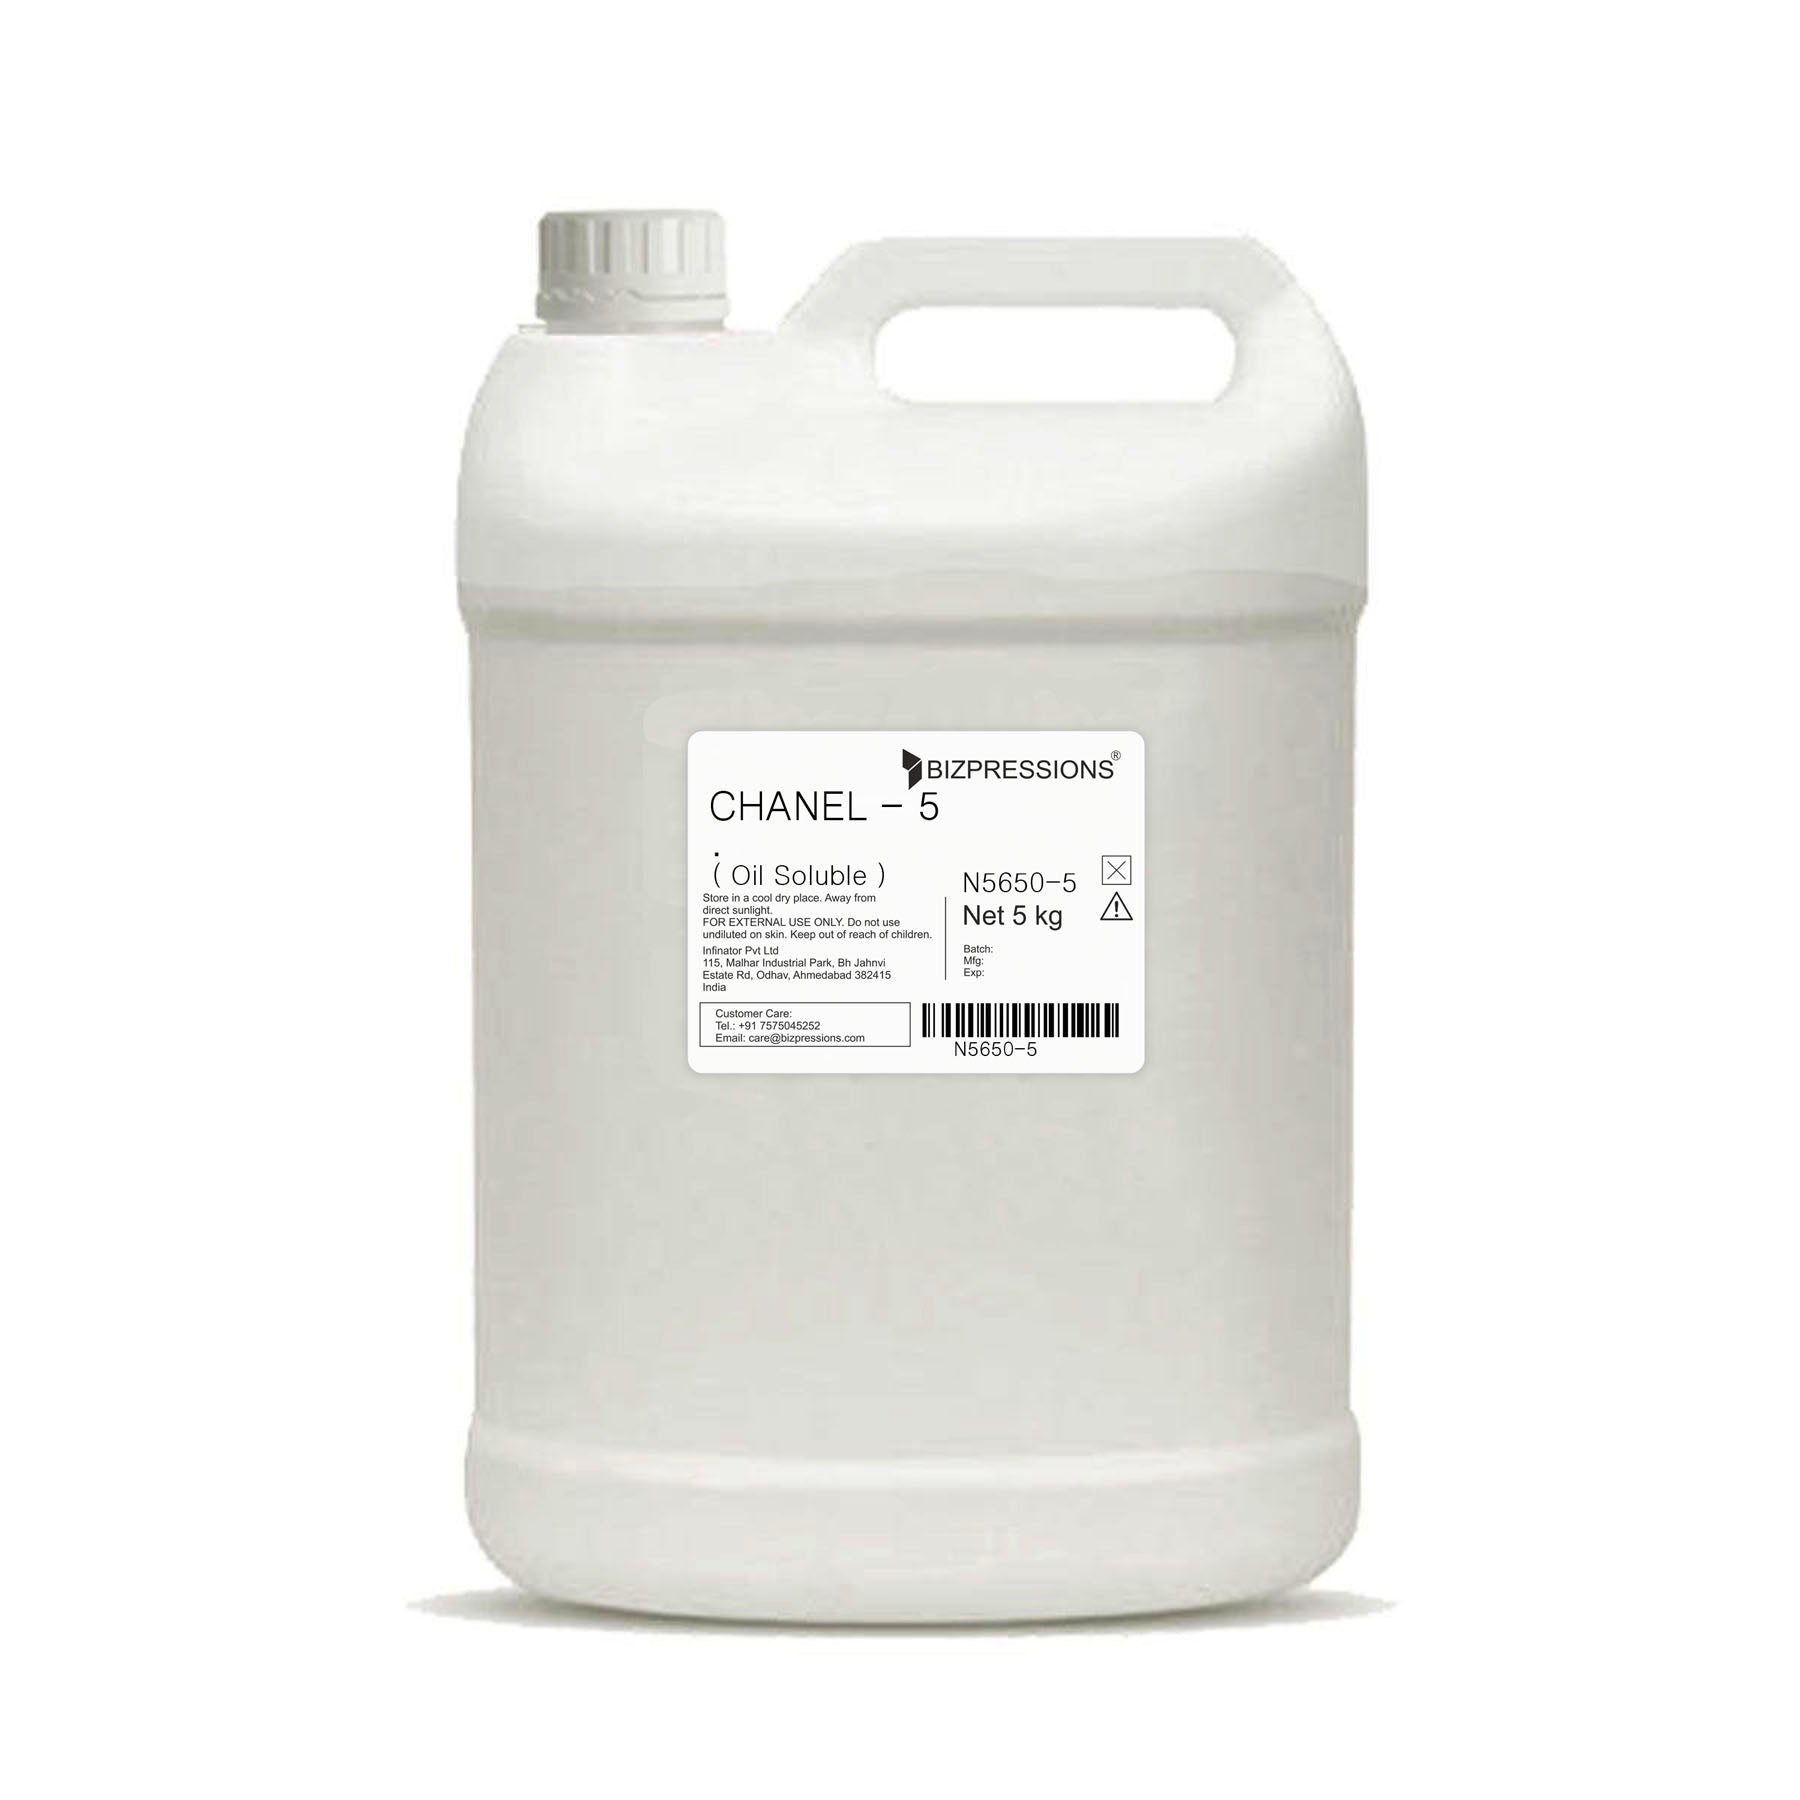 CHANEL - 5 - Fragrance ( Oil Soluble ) - 5 kg